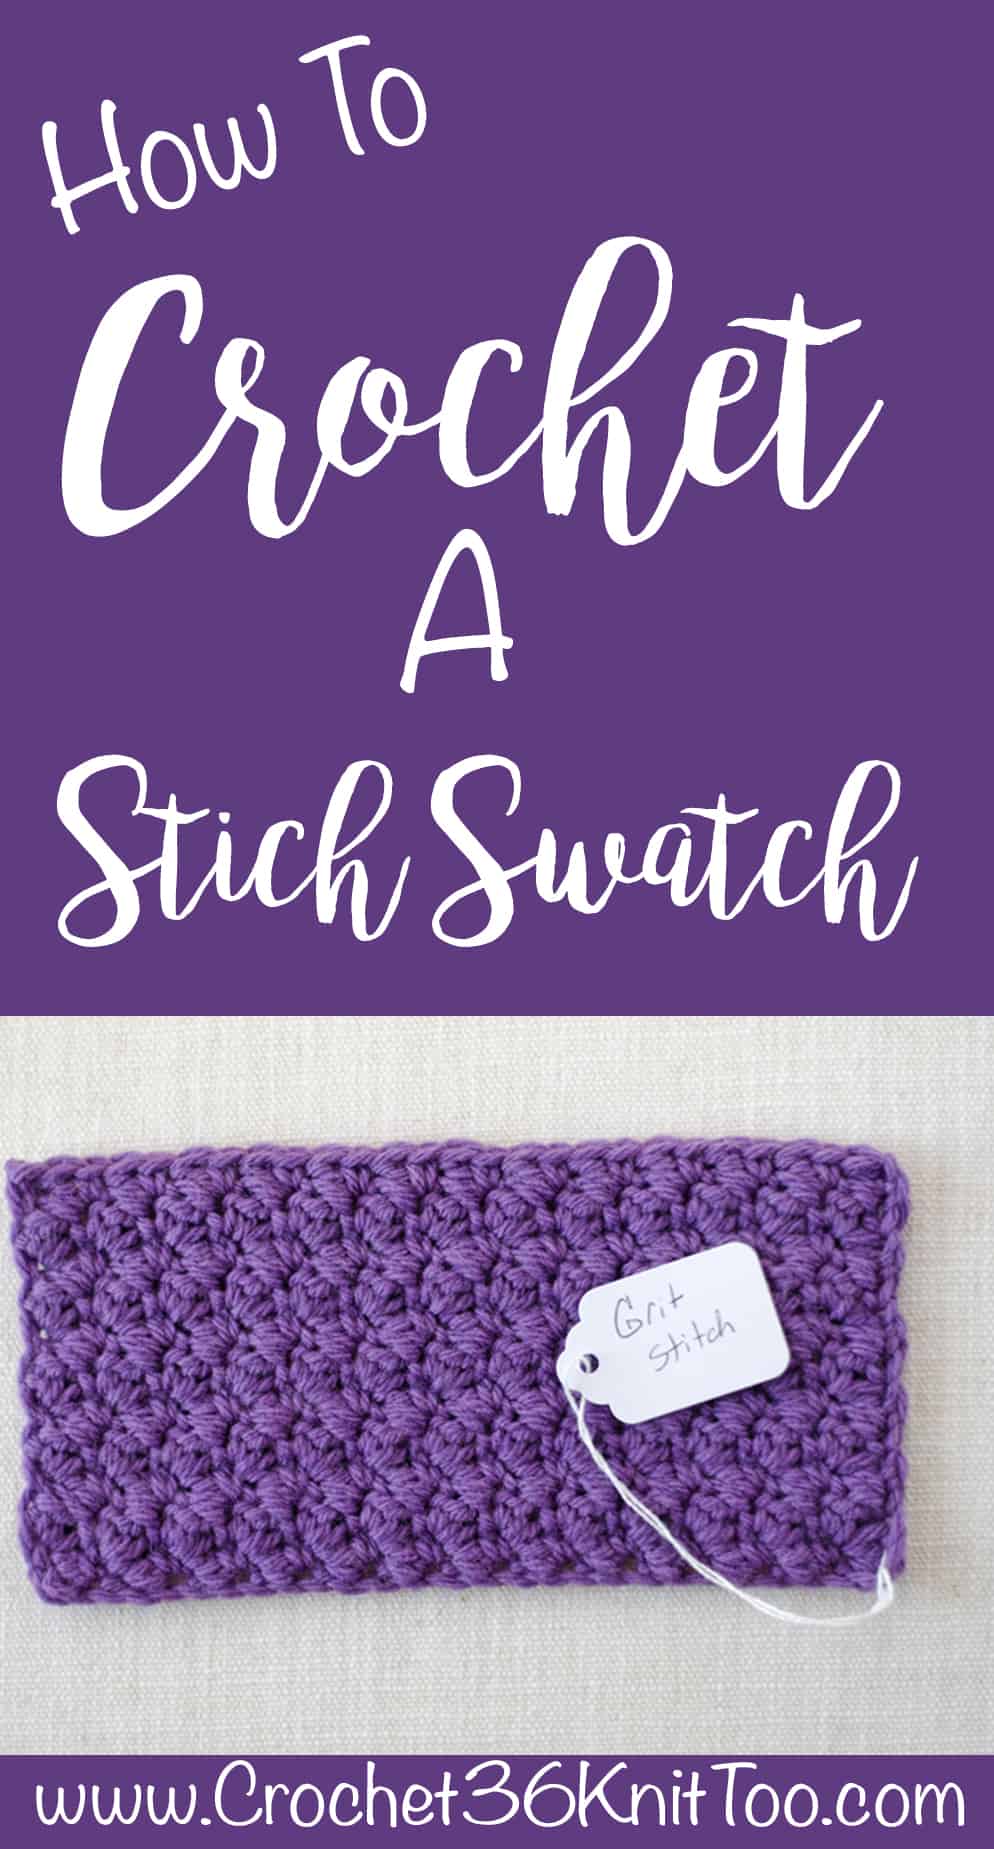 How to crochet a stitch swatch